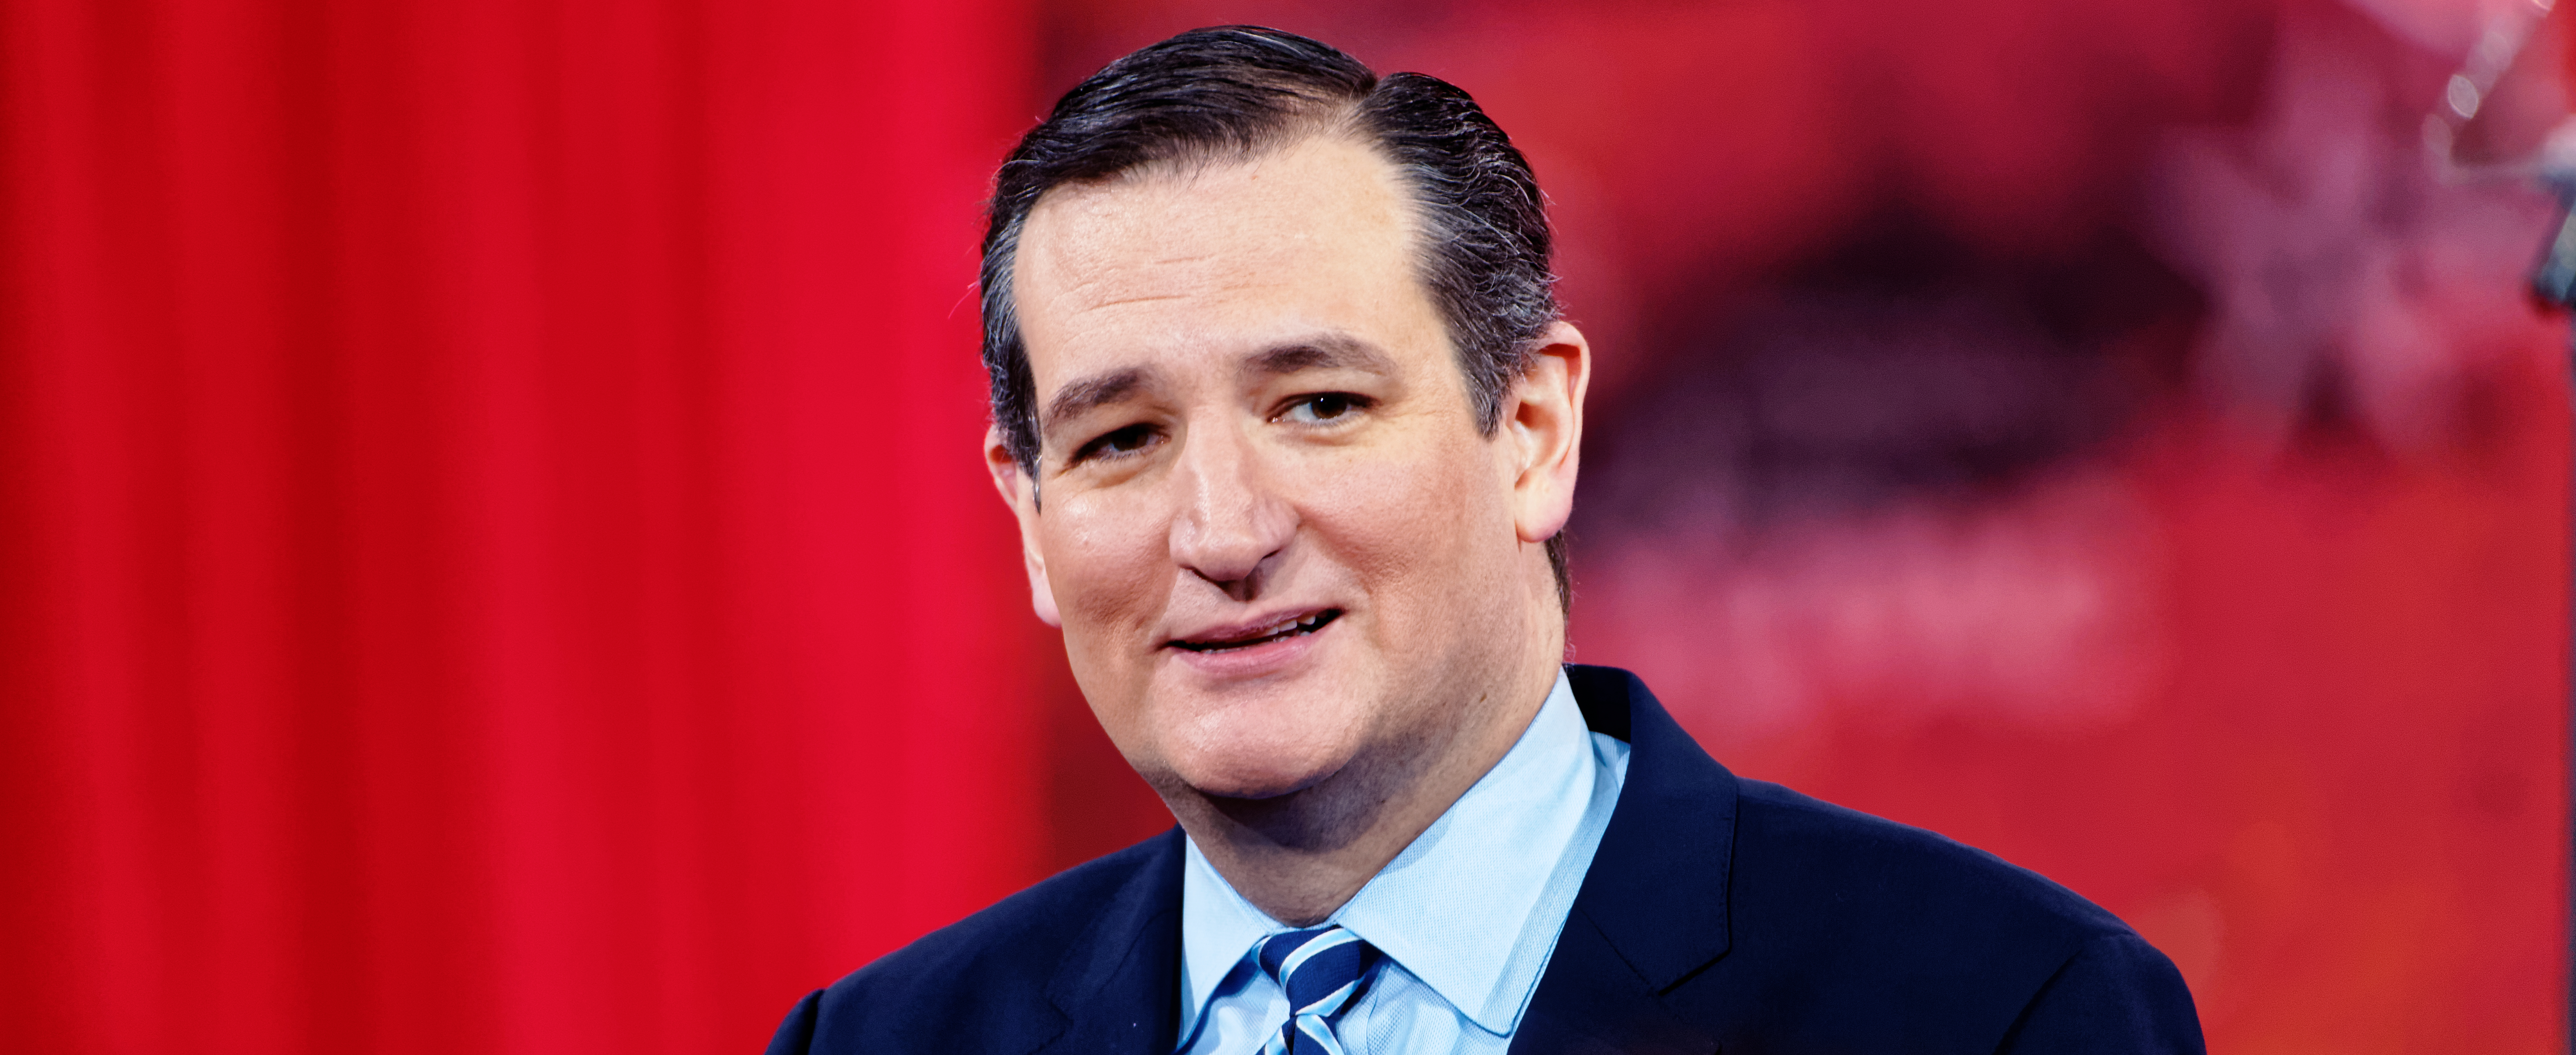 Senator Ted Cruz of Texas